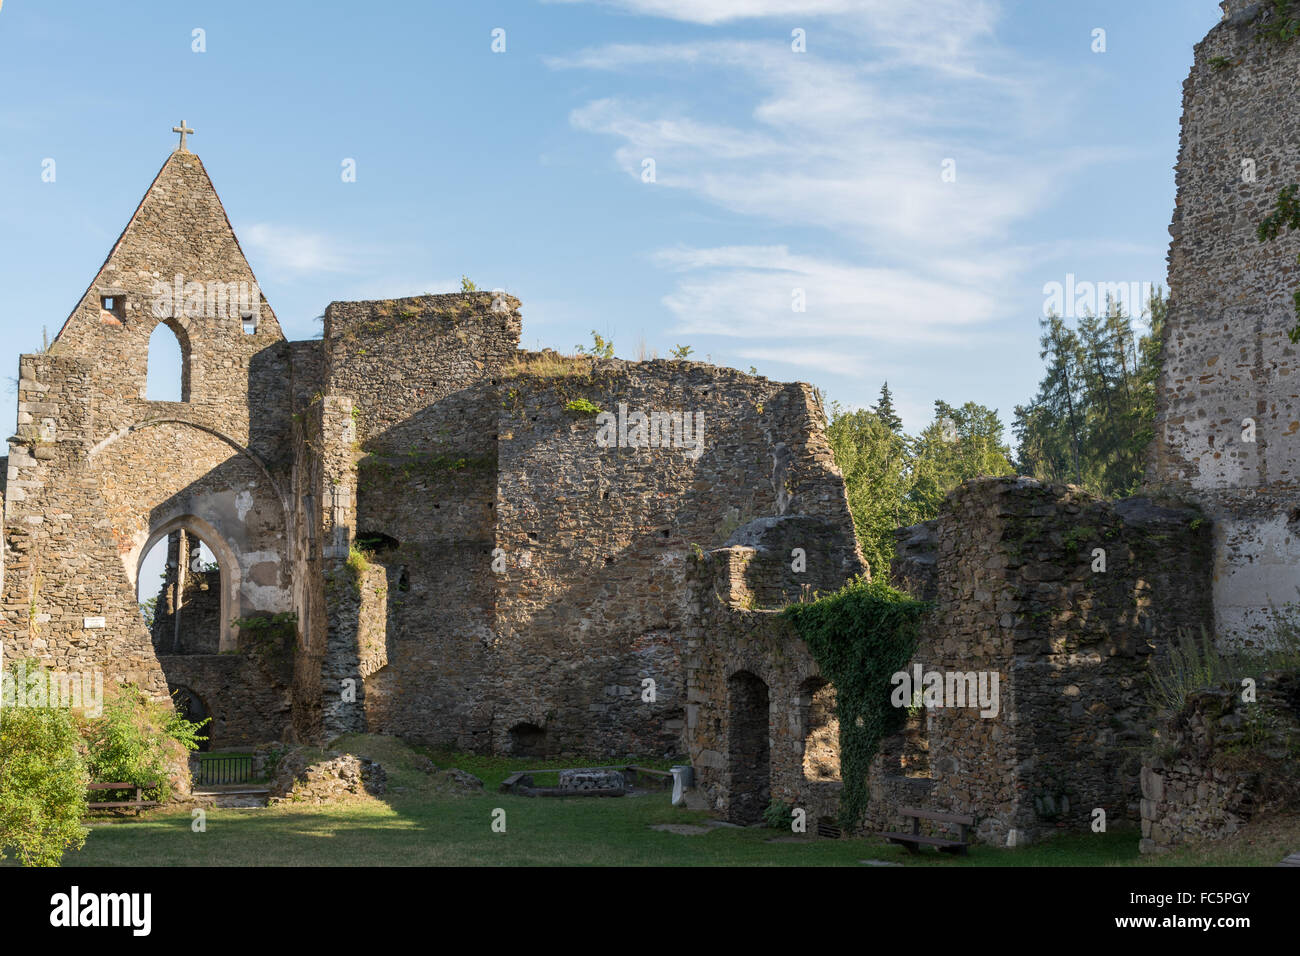 castle ruin schaunberg - austria Stock Photo